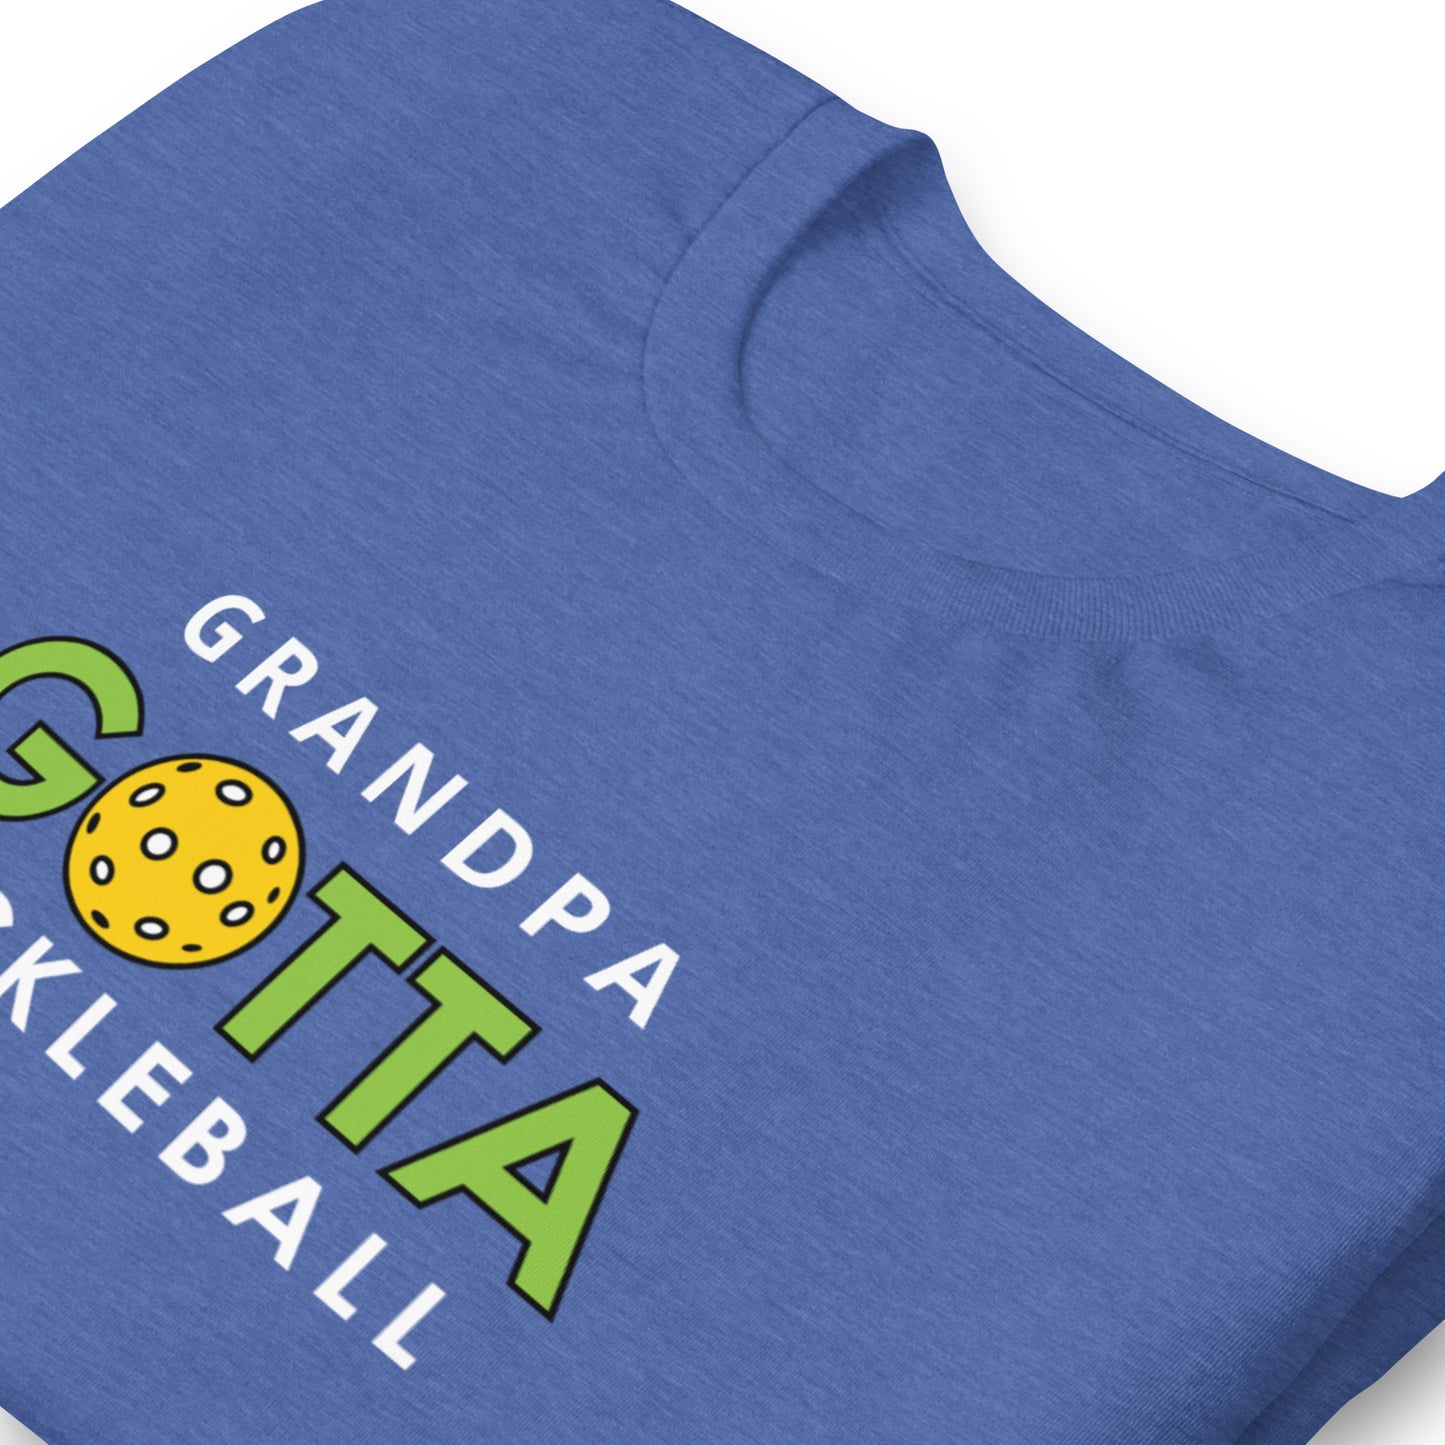 Classic T-Shirt: GRANDPA GOTTA PICKLEBALL (more colors)